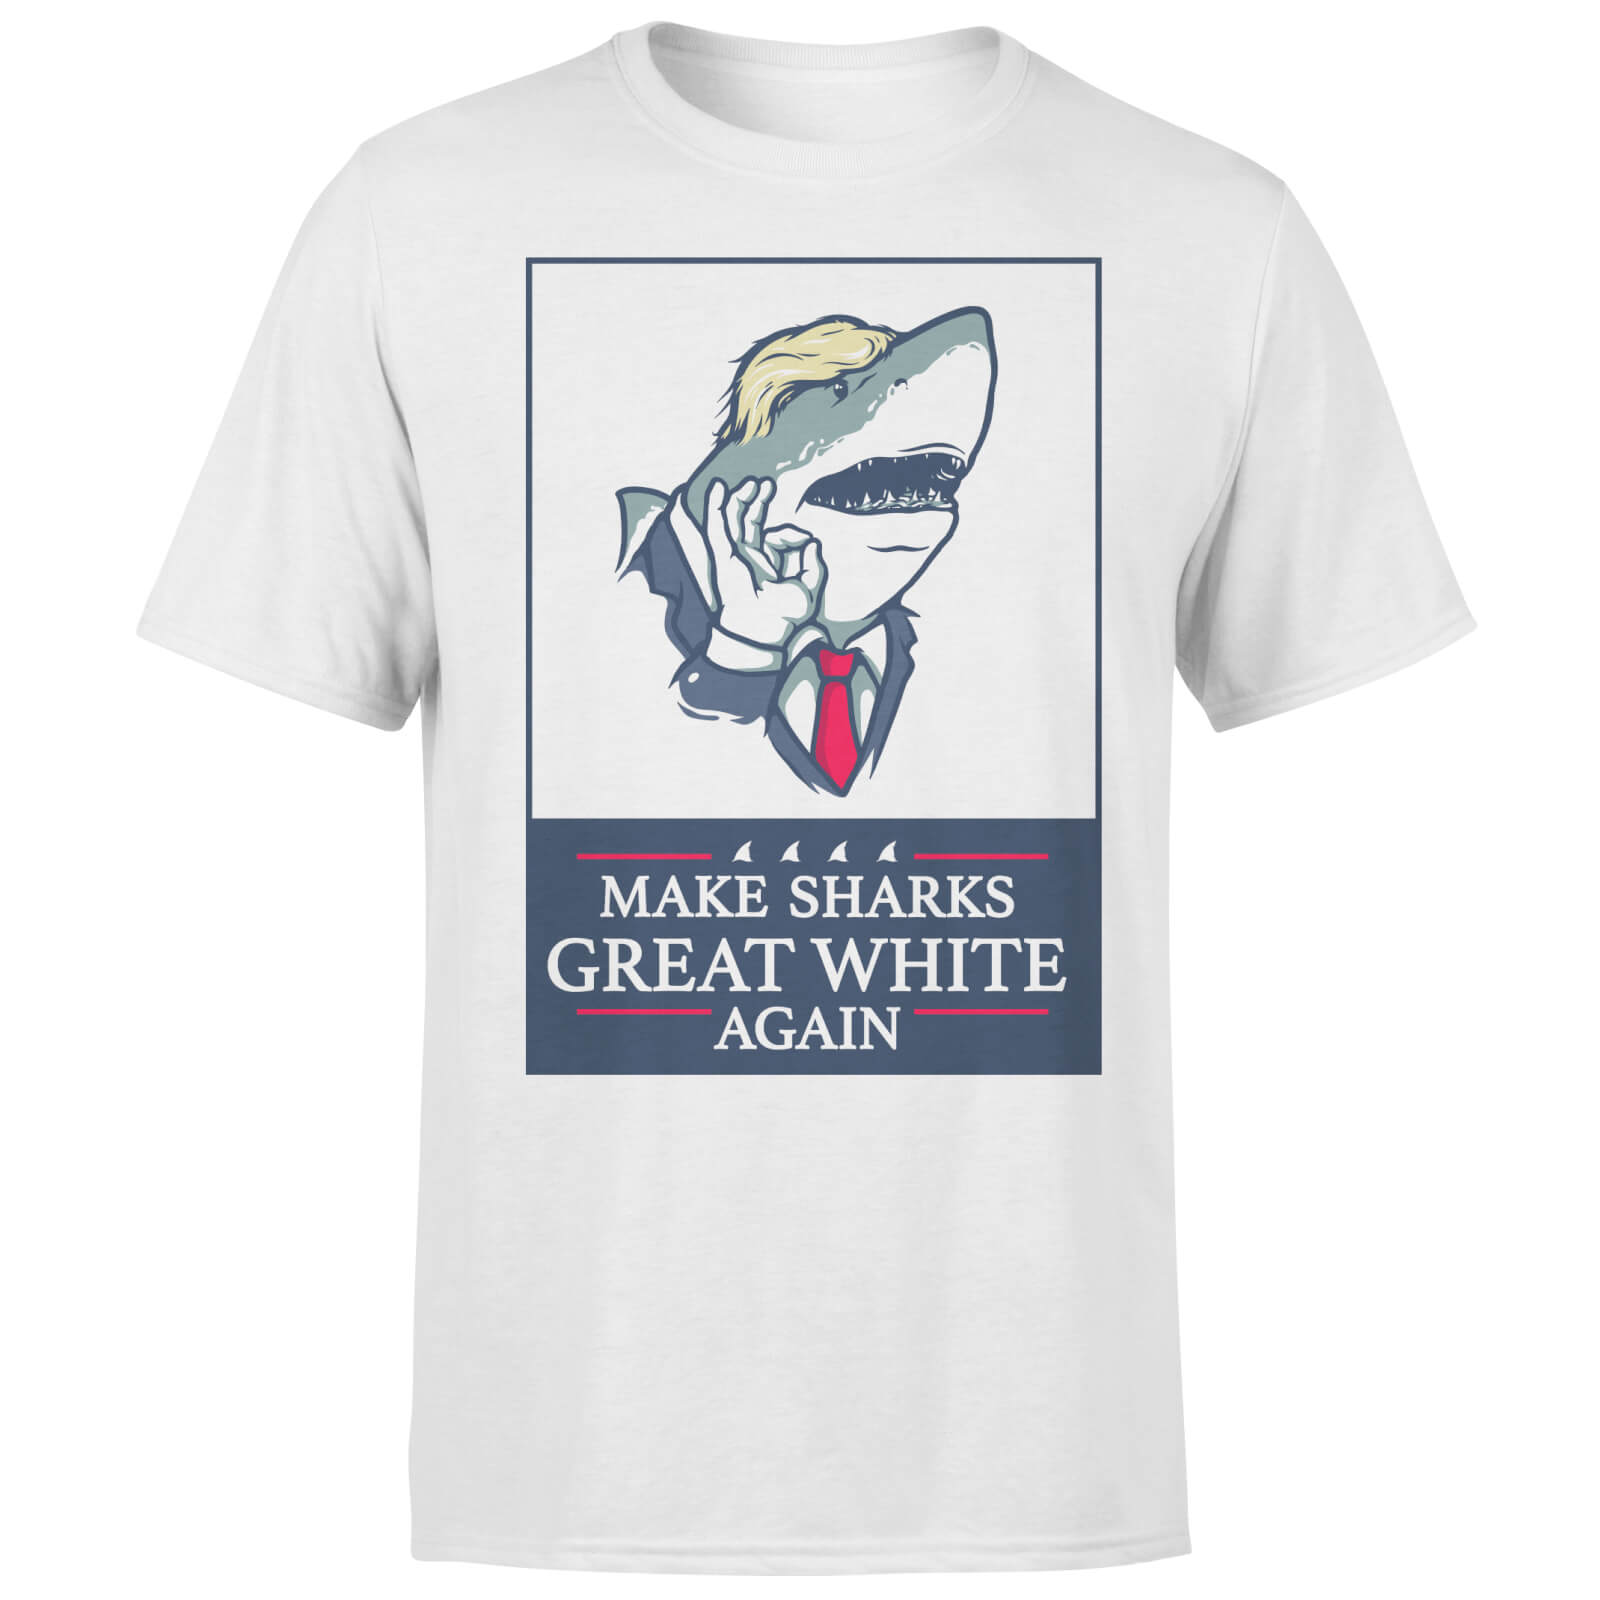 Make Sharks Great White Again White T-Shirt - YL - White